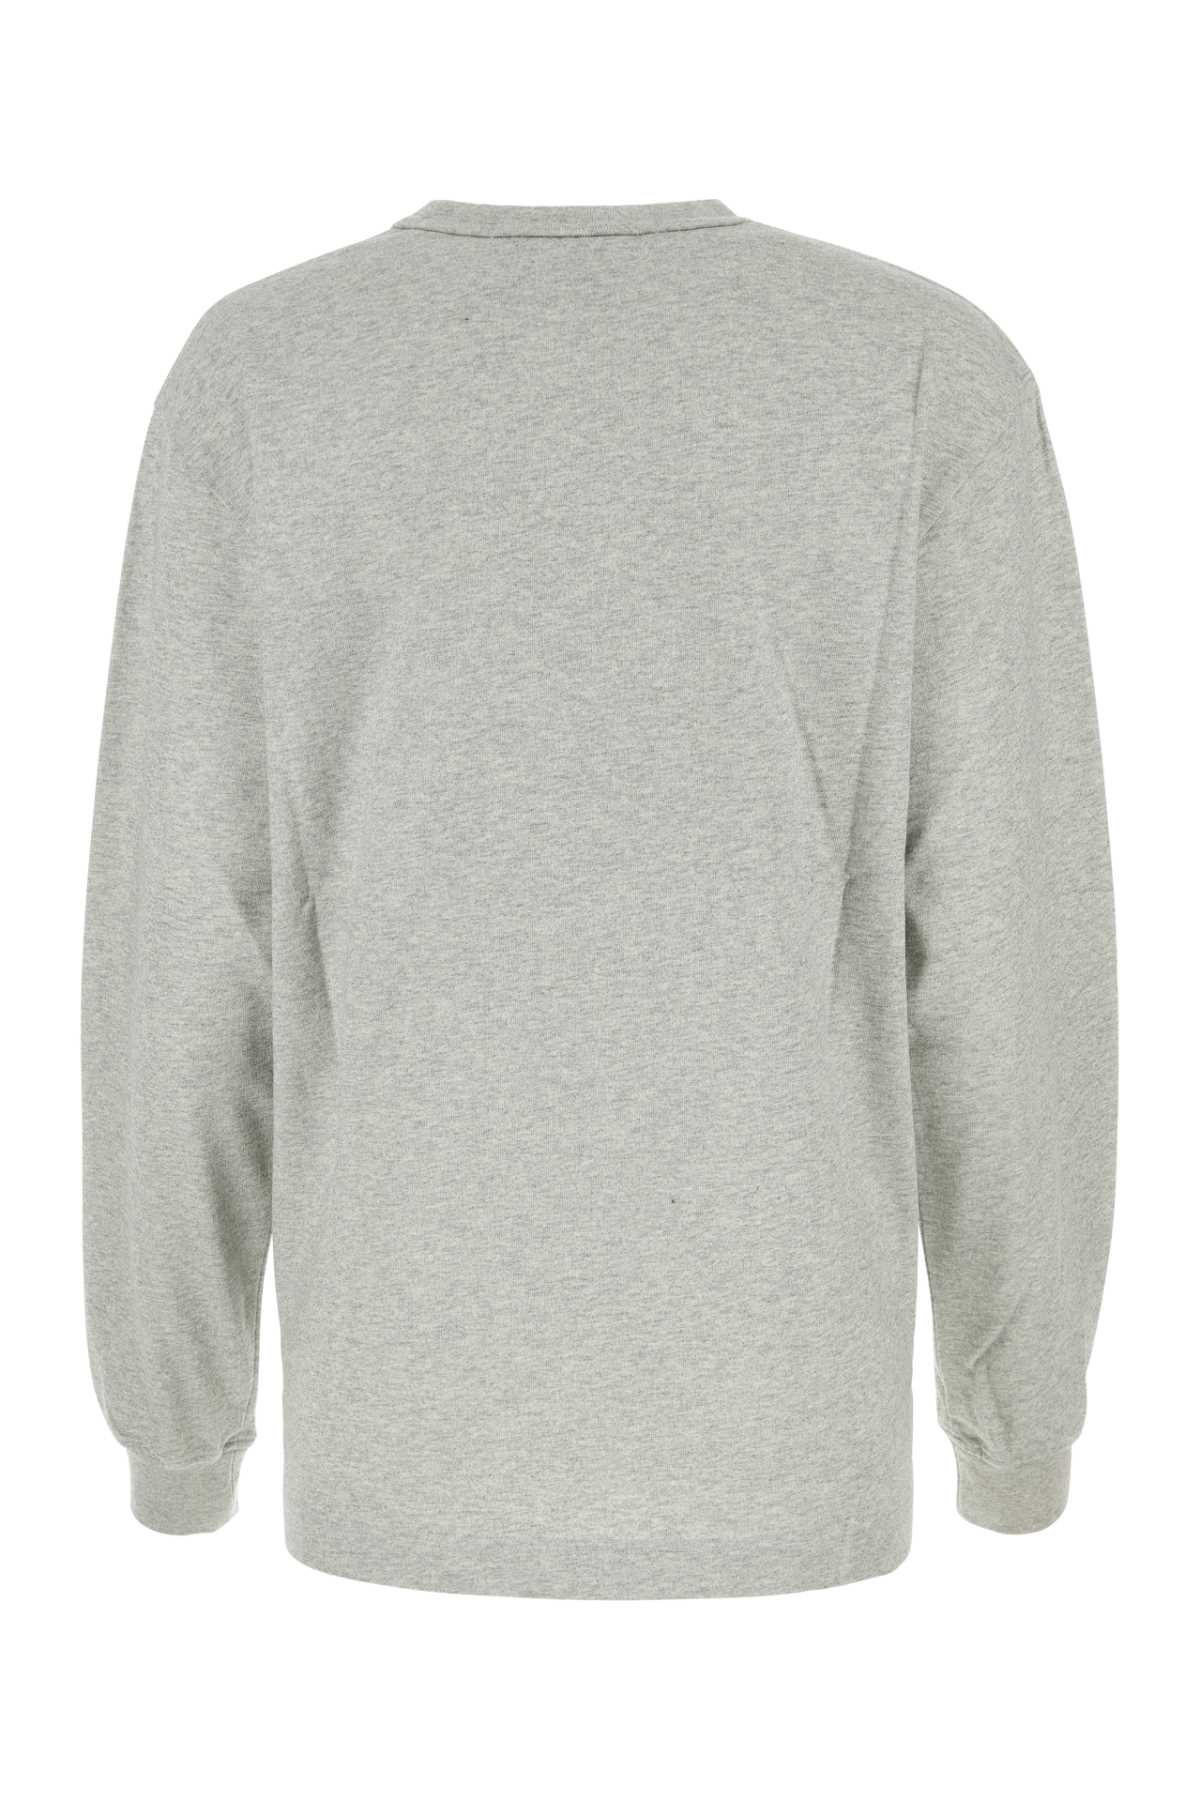 Alexander Wang Melange Grey Cotton Oversize T-shirt In Lightheathergrey